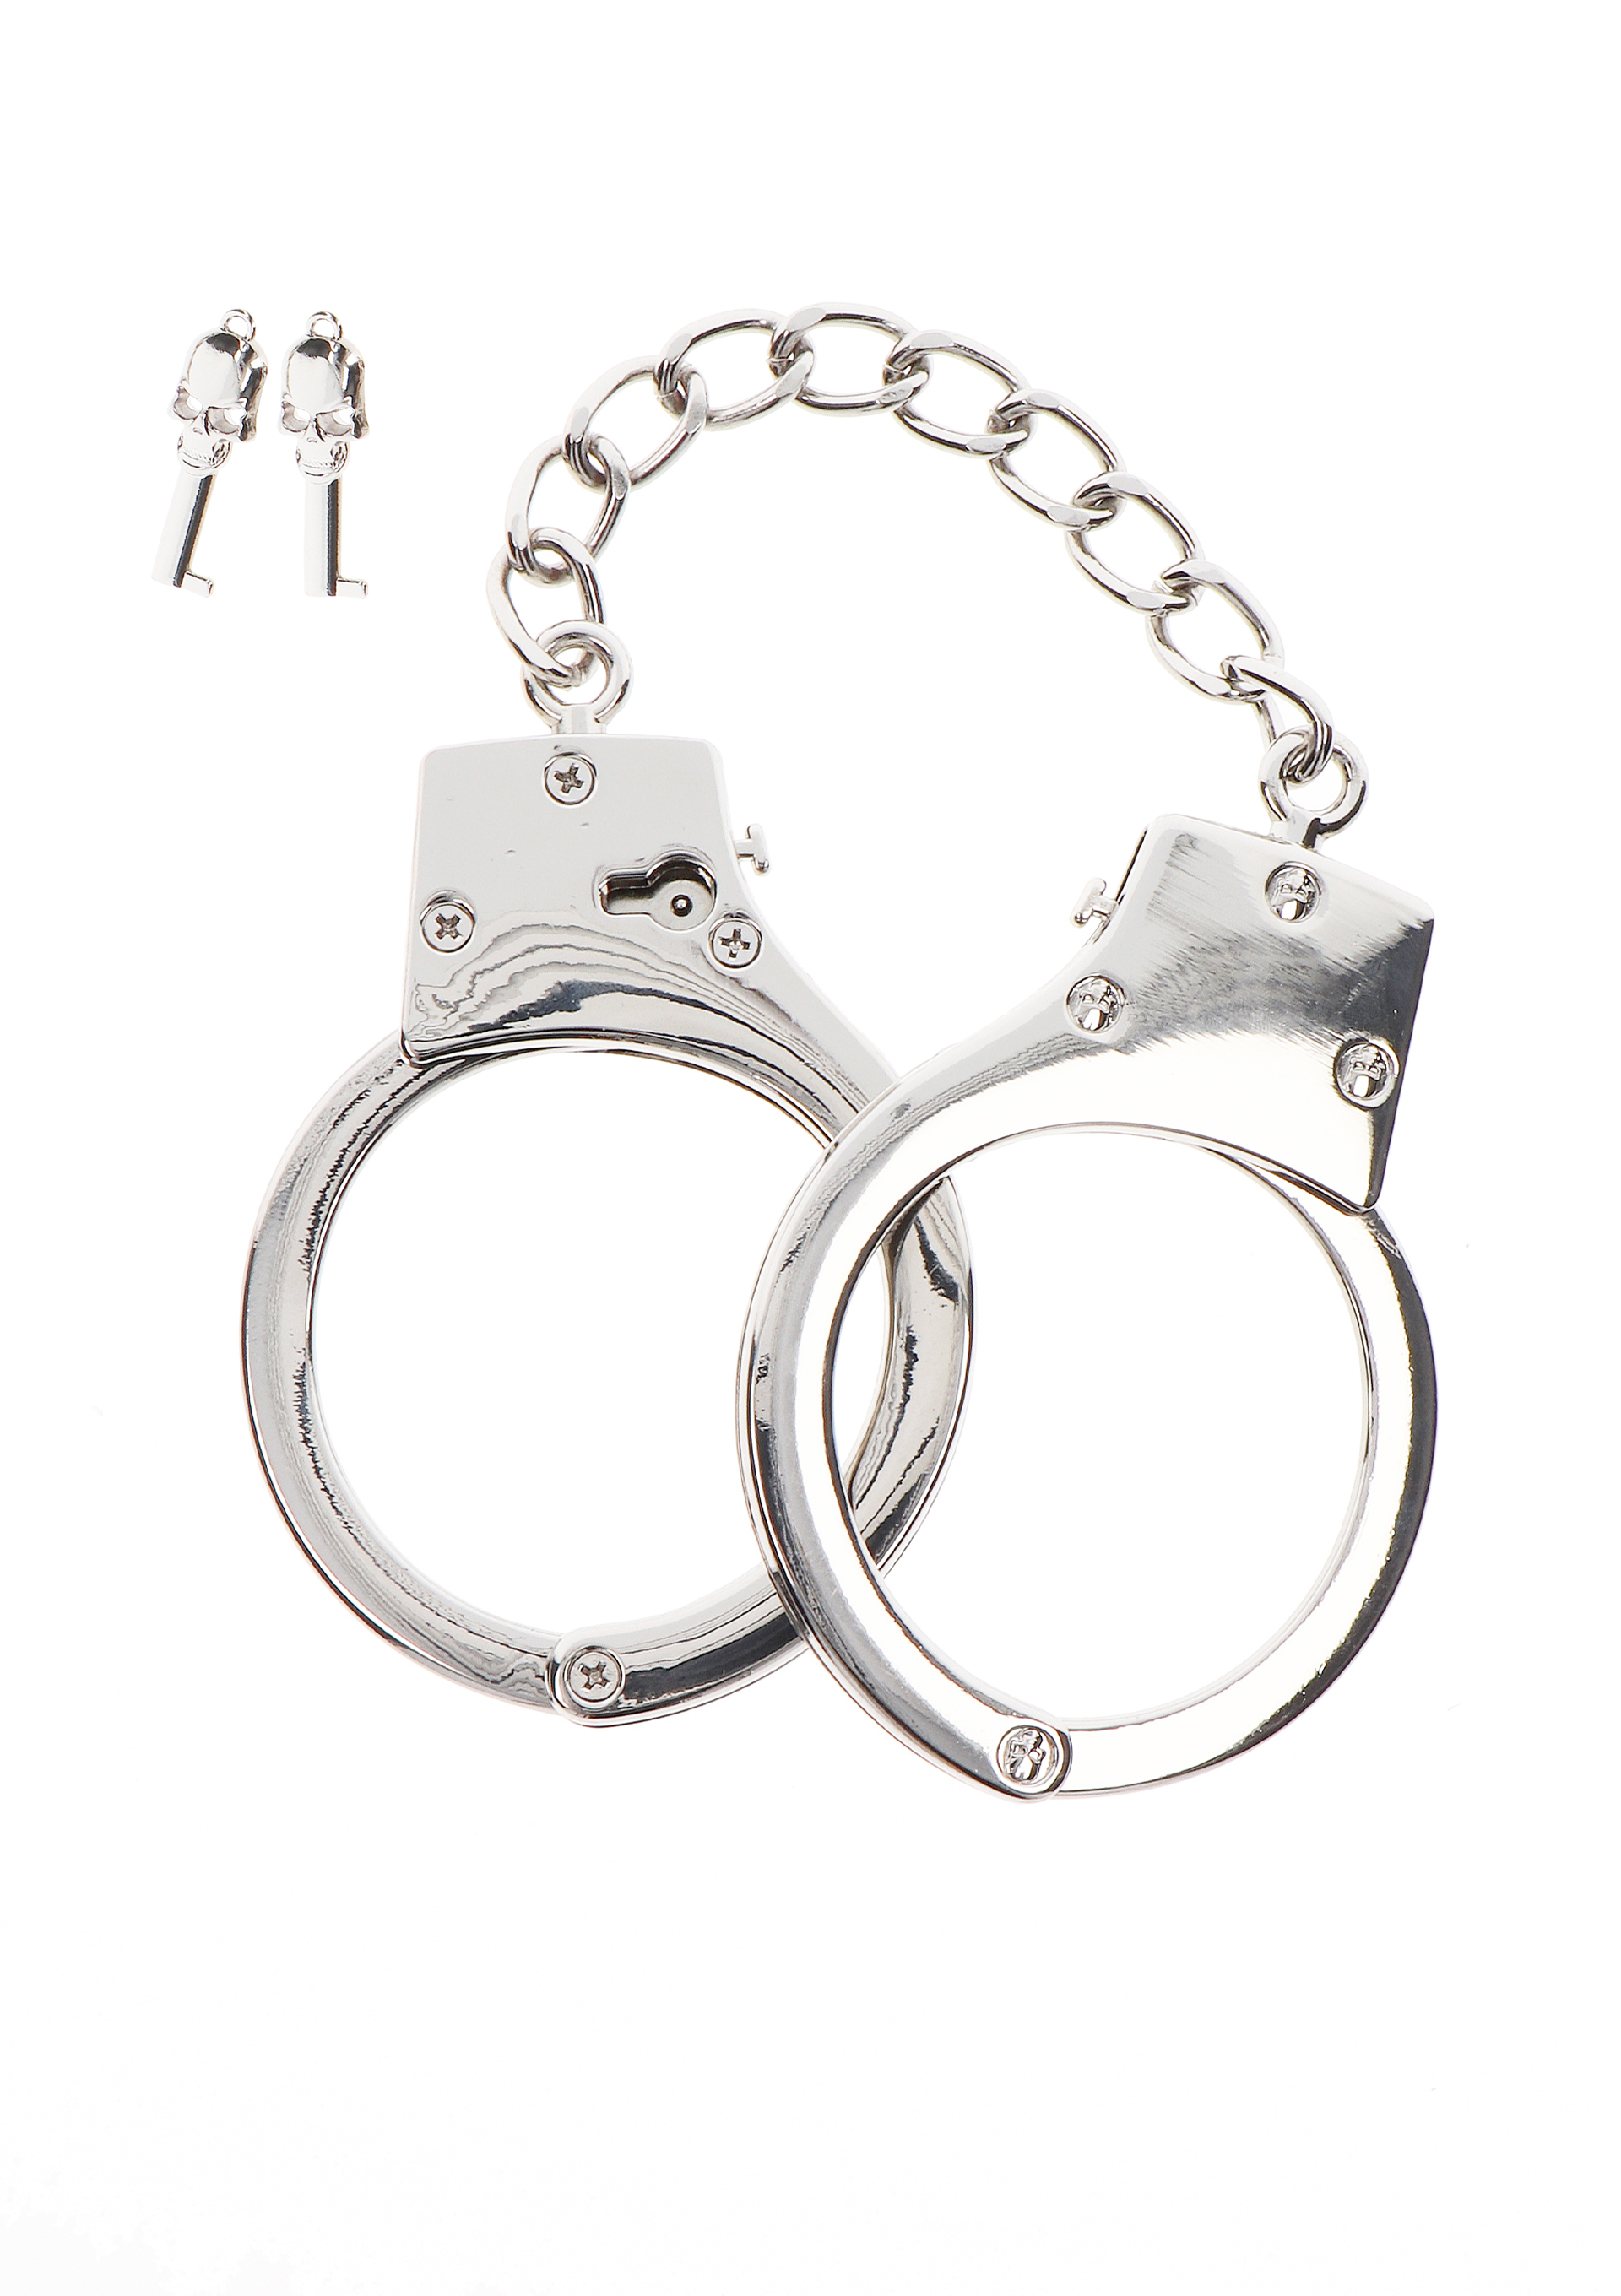 Taboom - Taboom Silver Plated BDSM Handcuffs